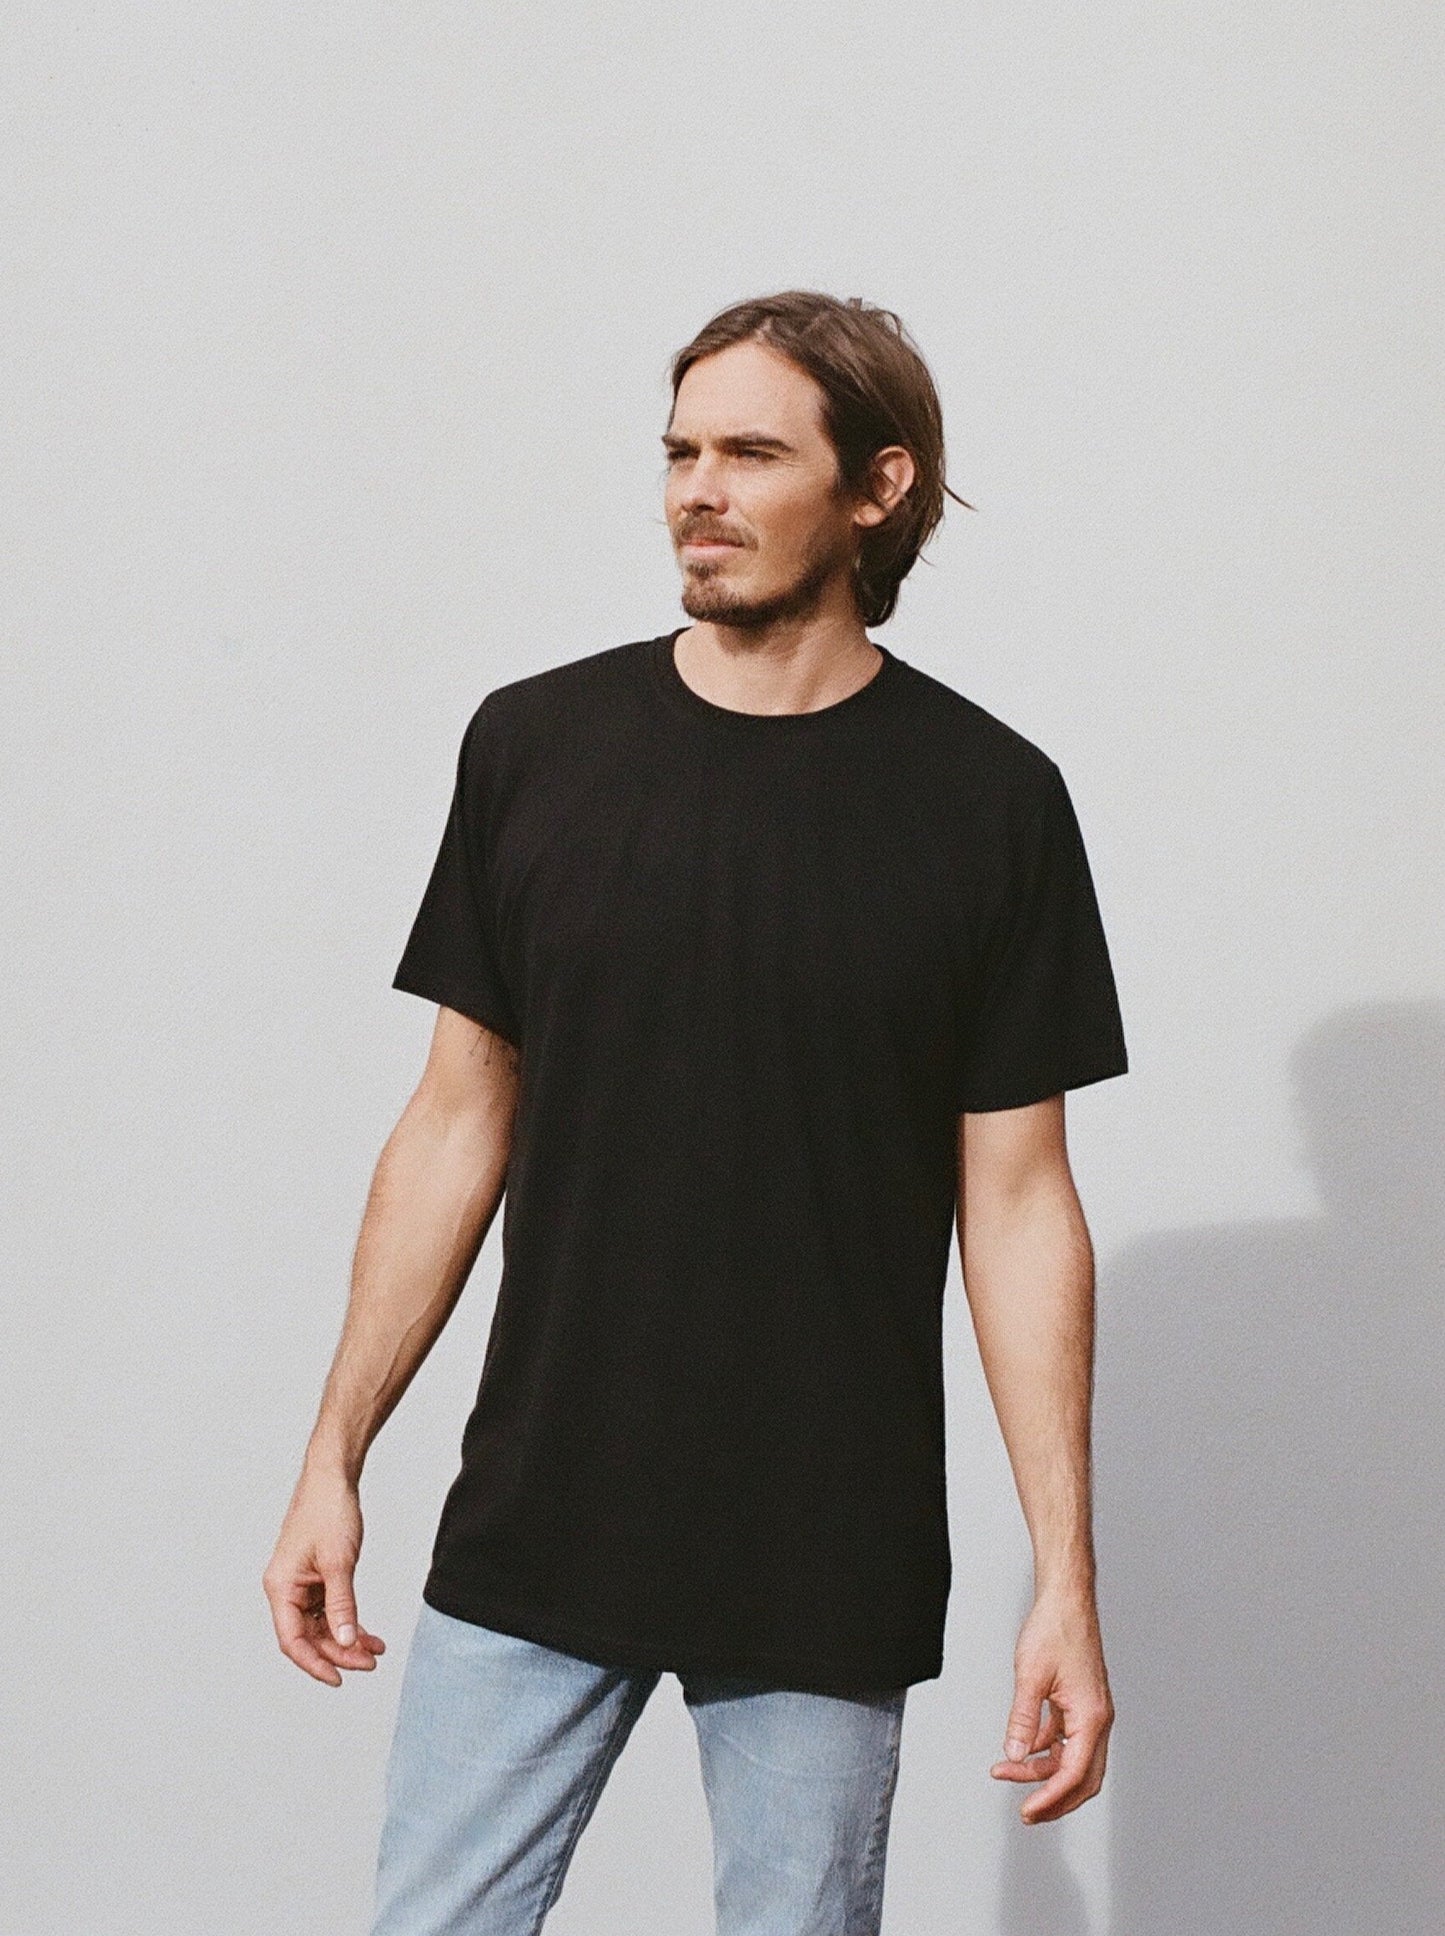 Hemp Clothing Australia - Mens Classic T-Shirt - Black